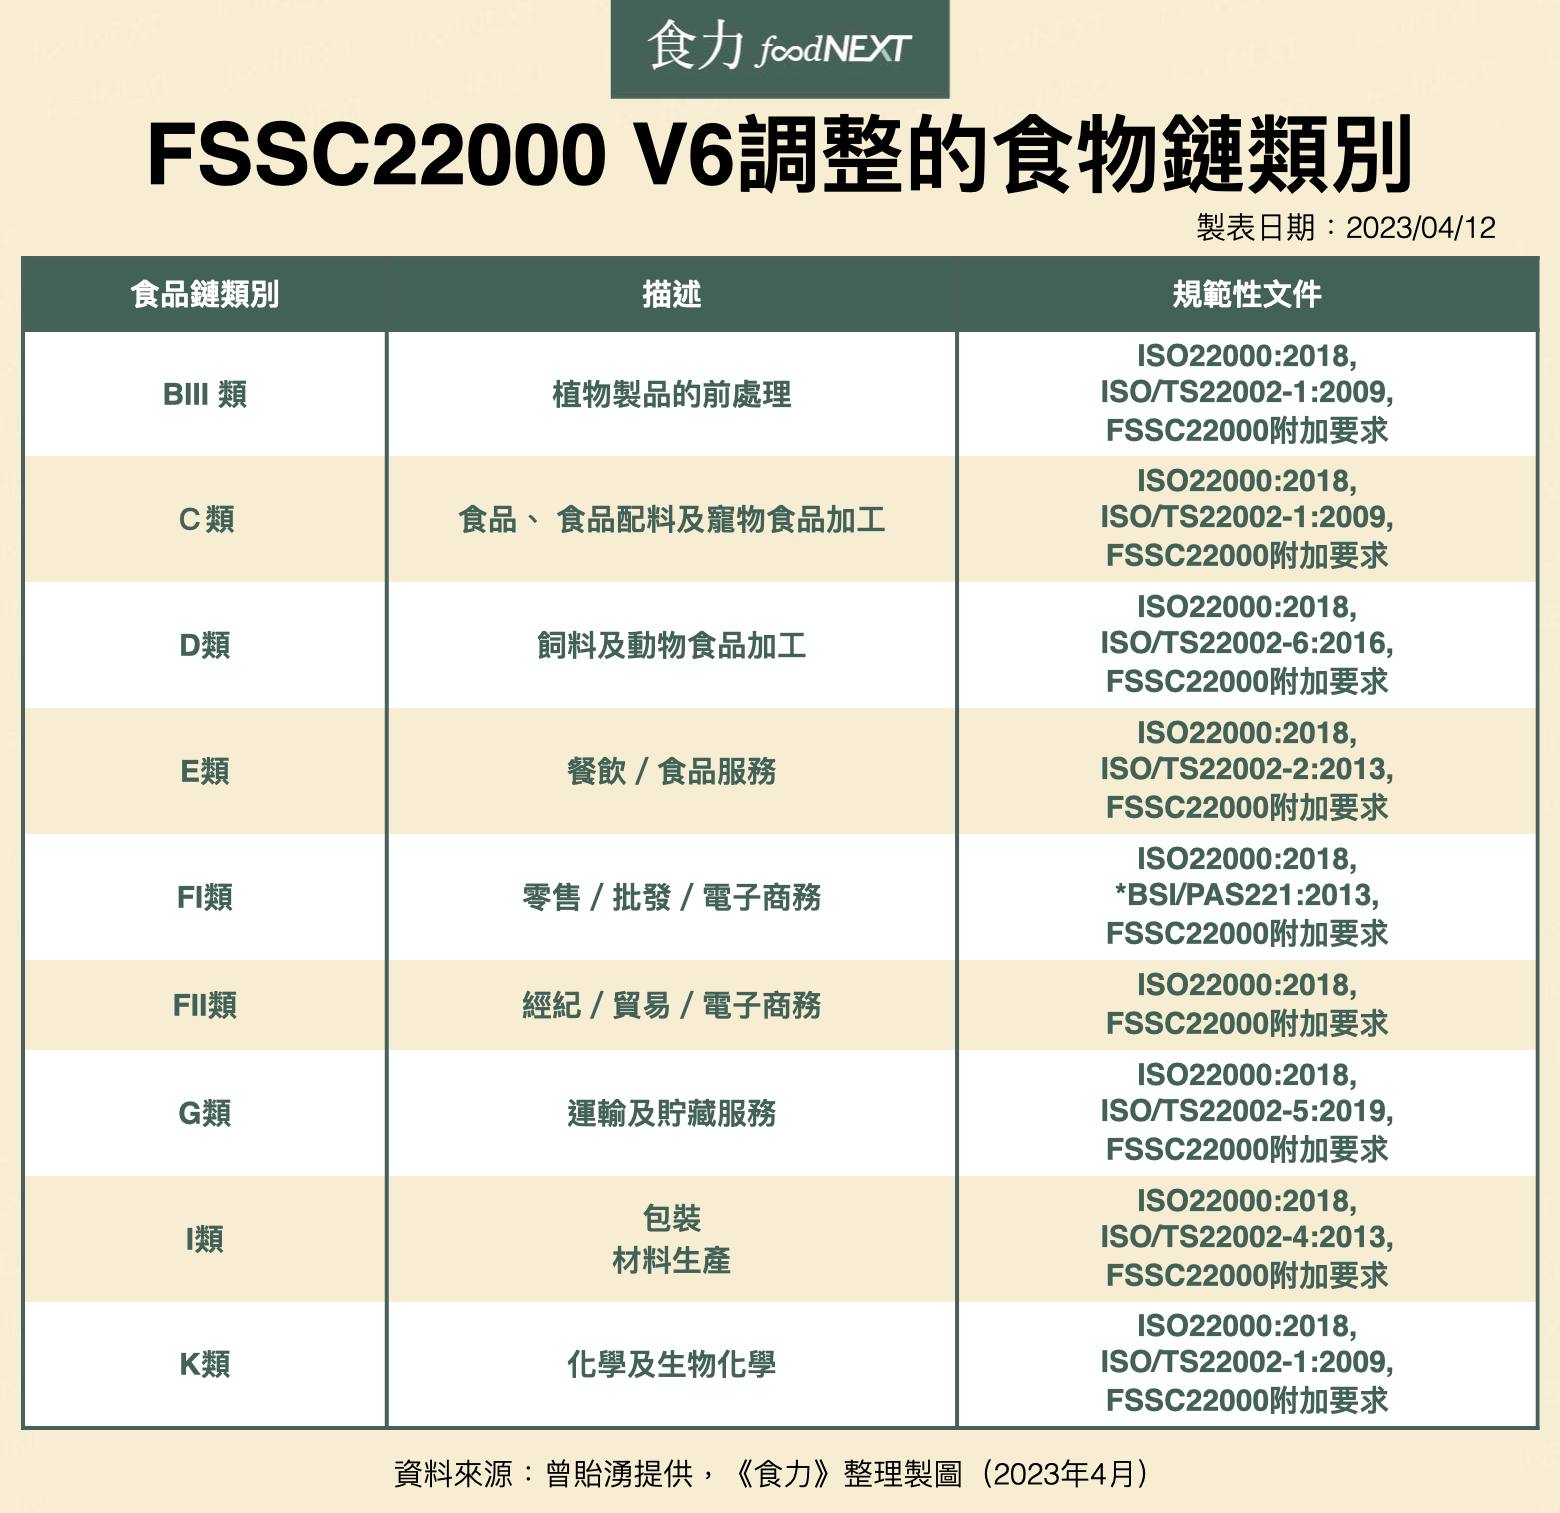 FSSC 22000 V6 新增/修改的條文